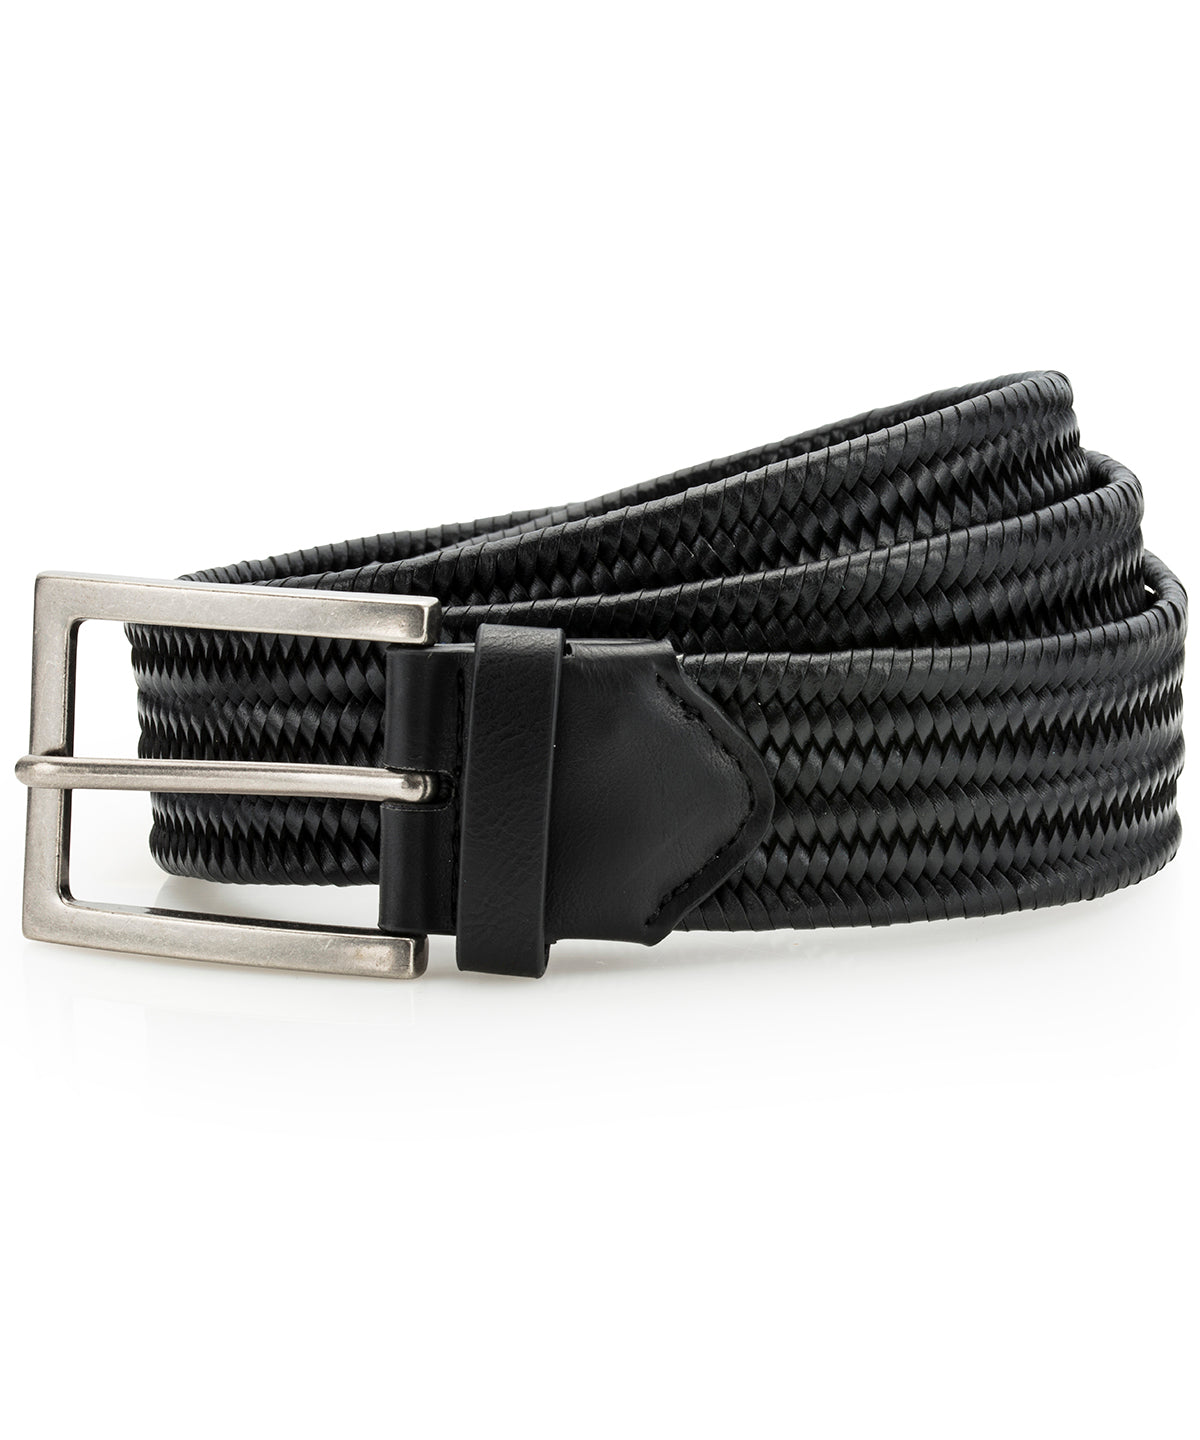 Belti - Leather Braid Belt